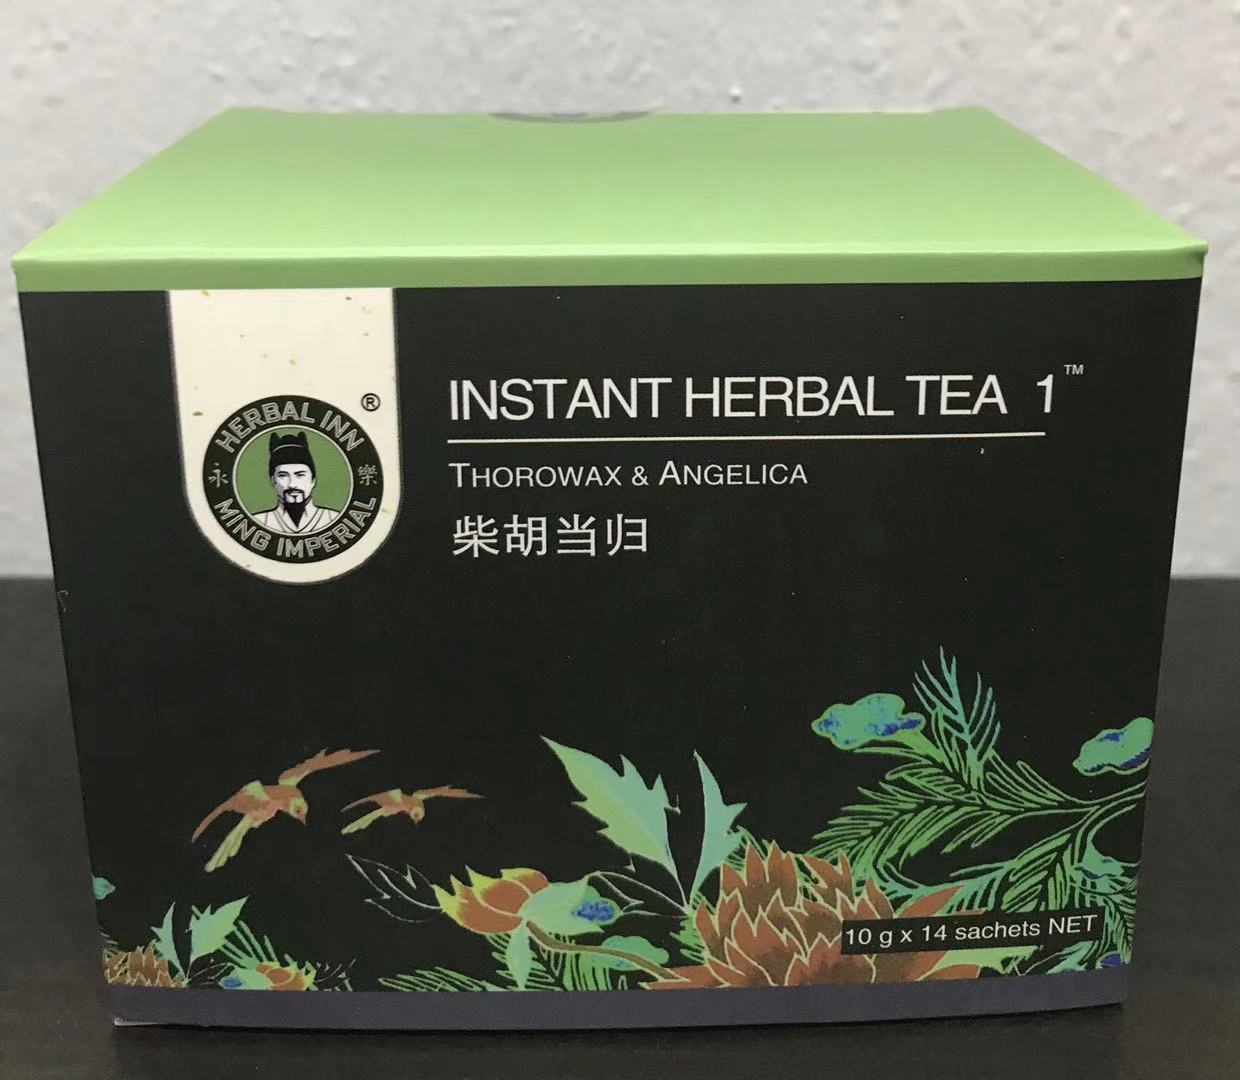 Instant Herbal Tea 1 - Thorowax & Angelica